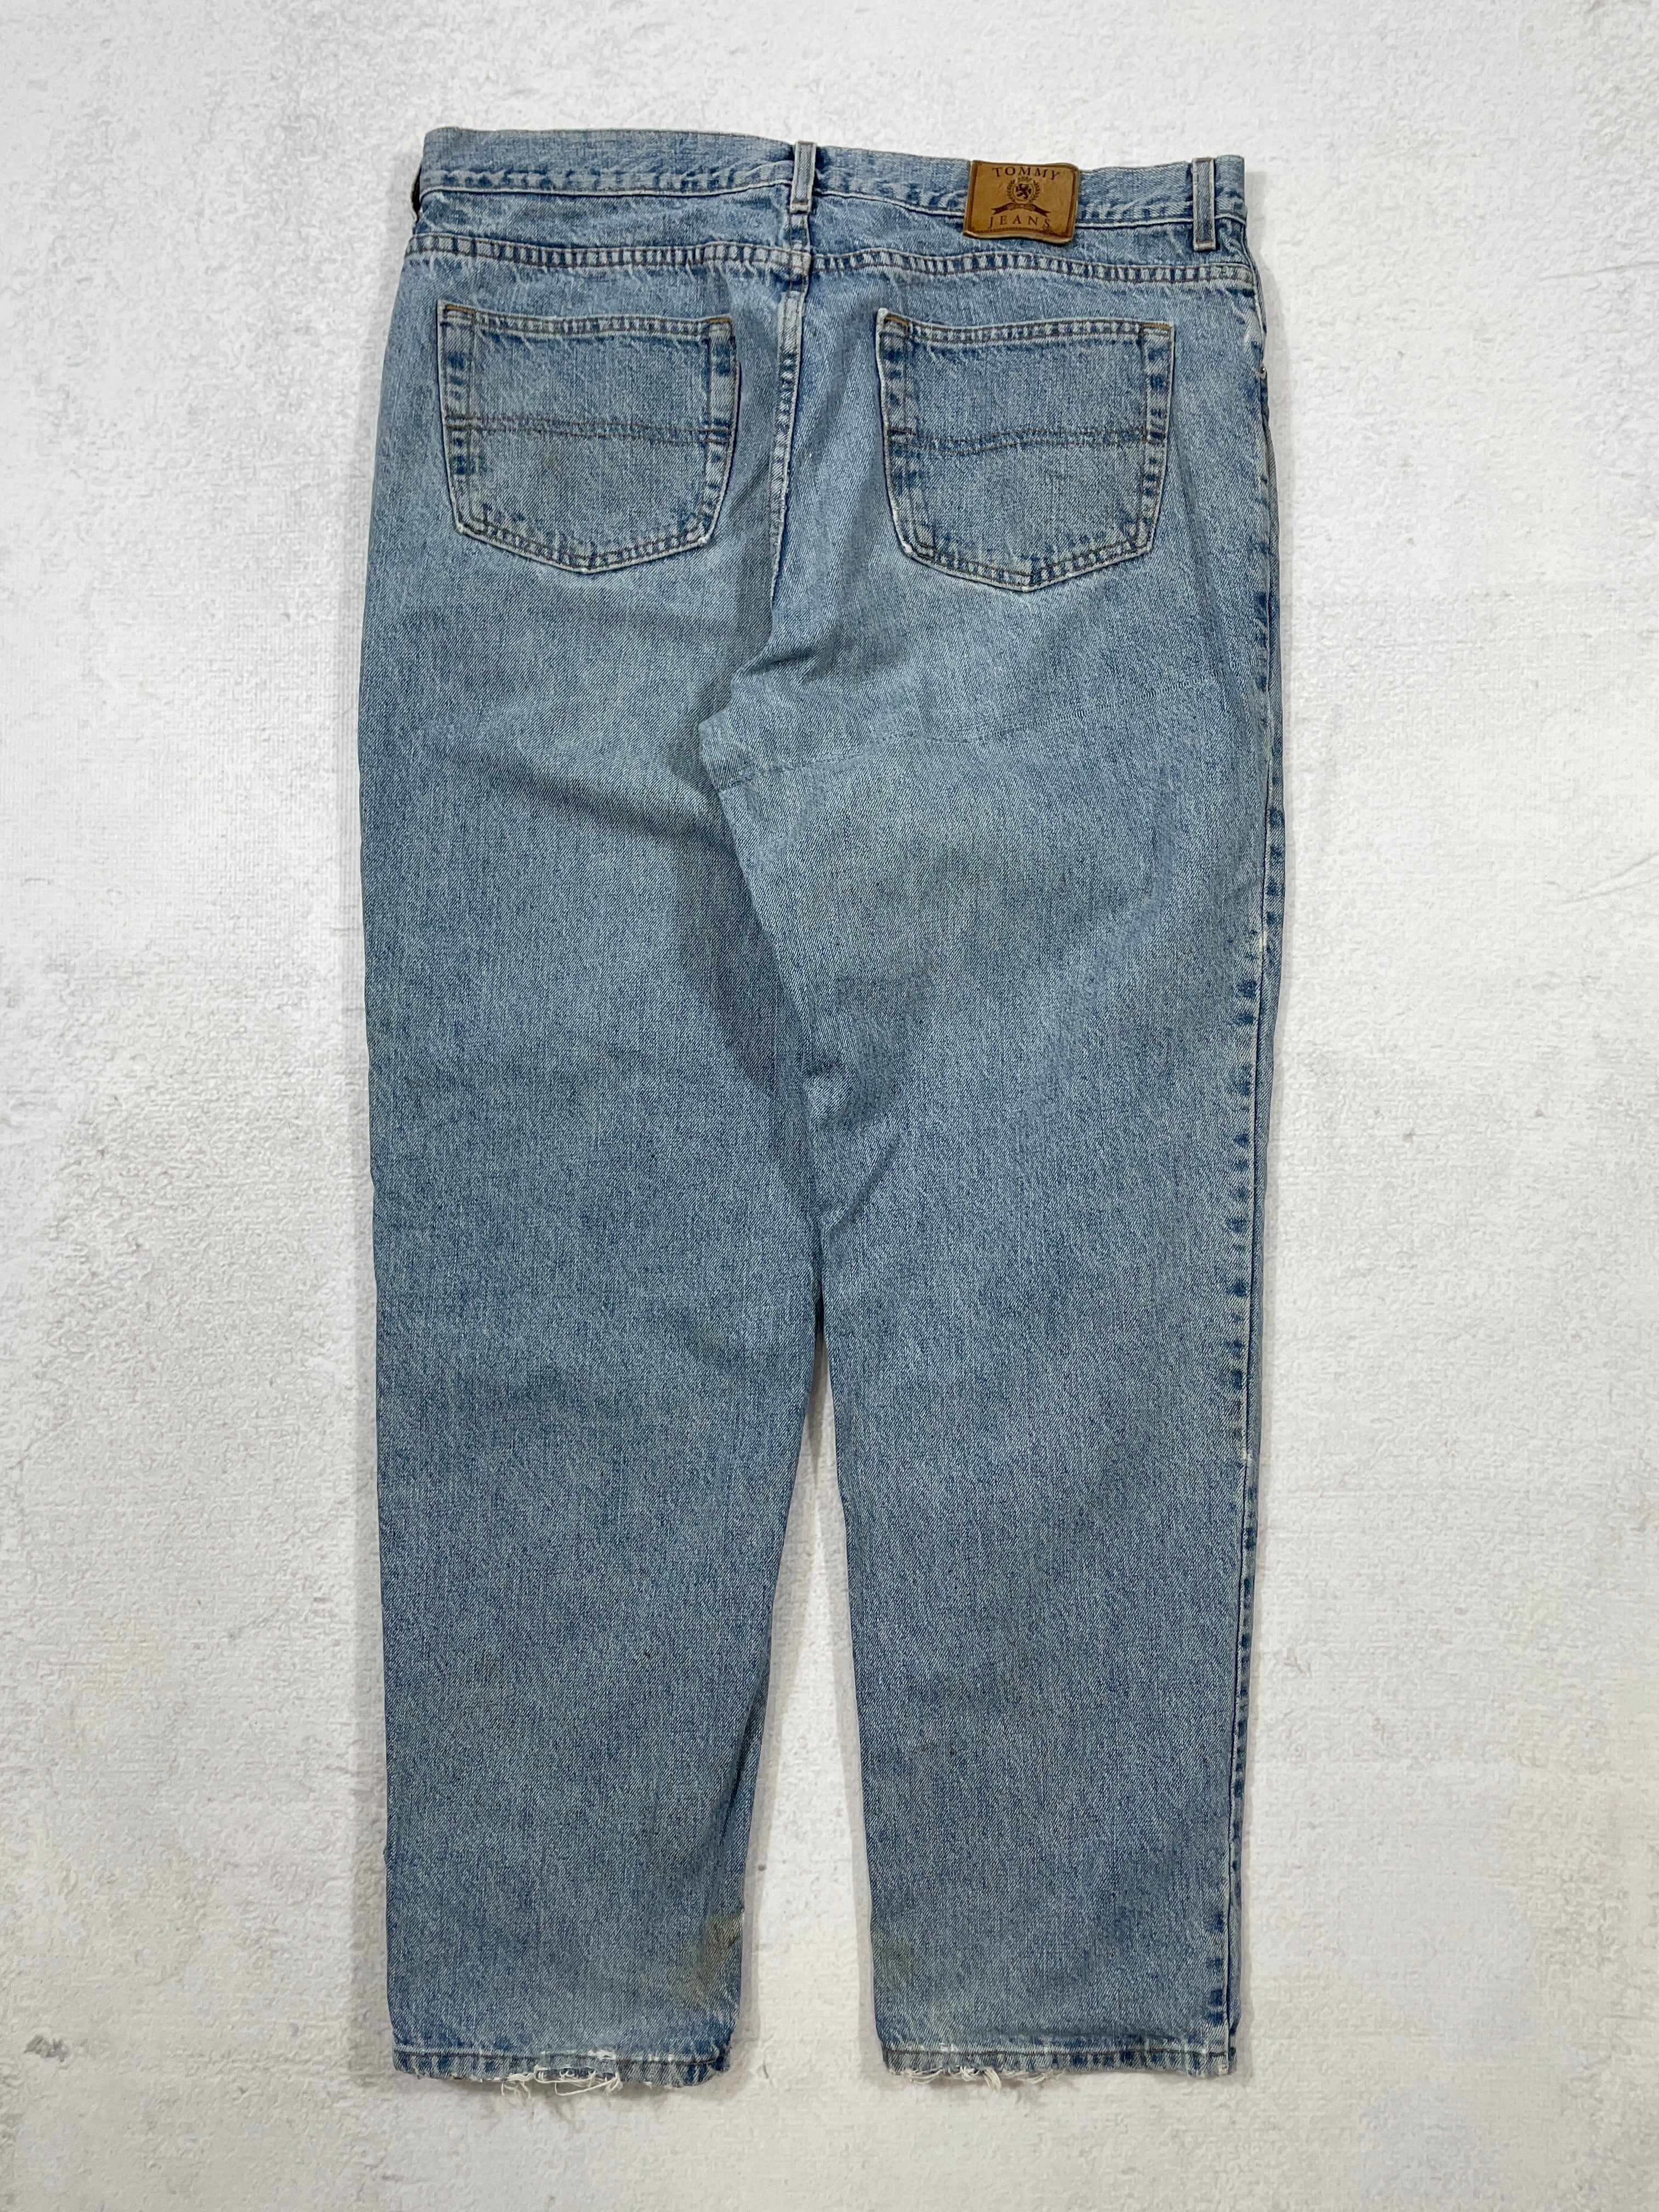 Vintage Tommy Hilfiger Jeans - Men's 38Wx34L